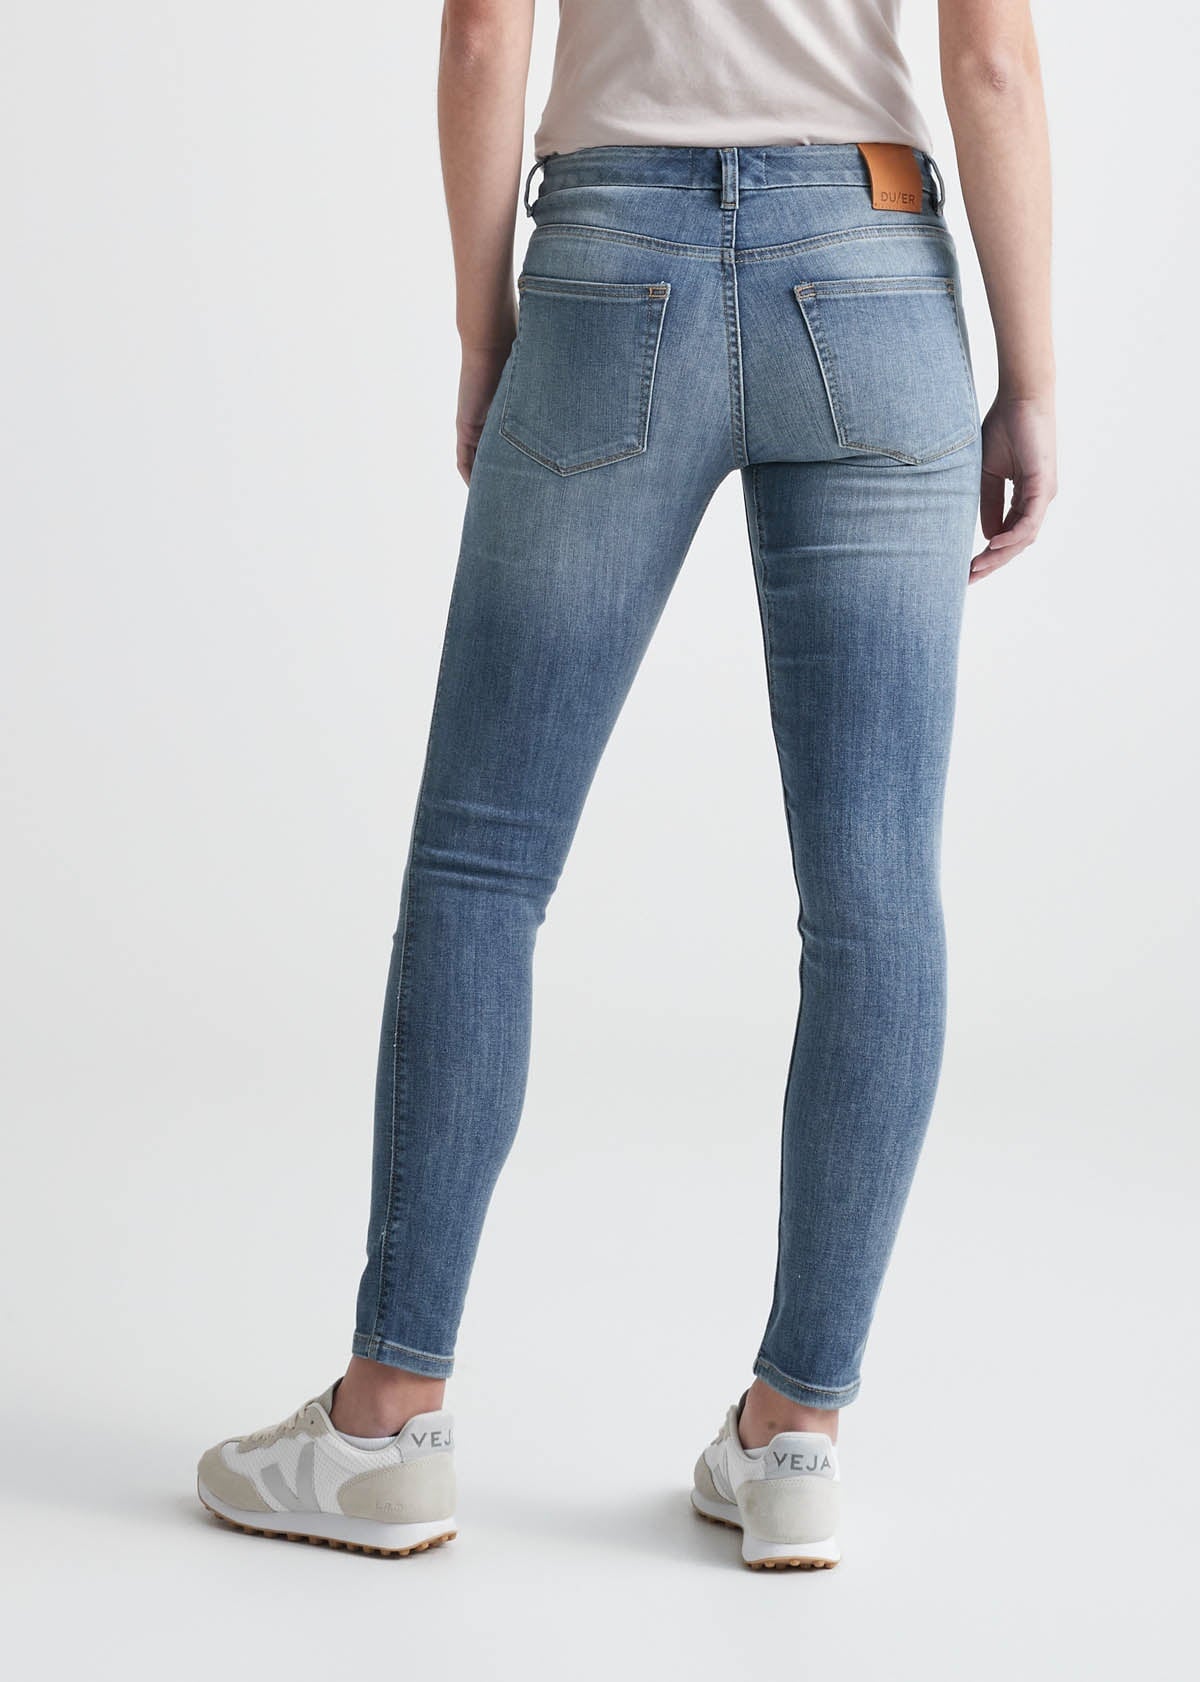 Women's Light Blue Mid Rise Fit Stretch Jeans